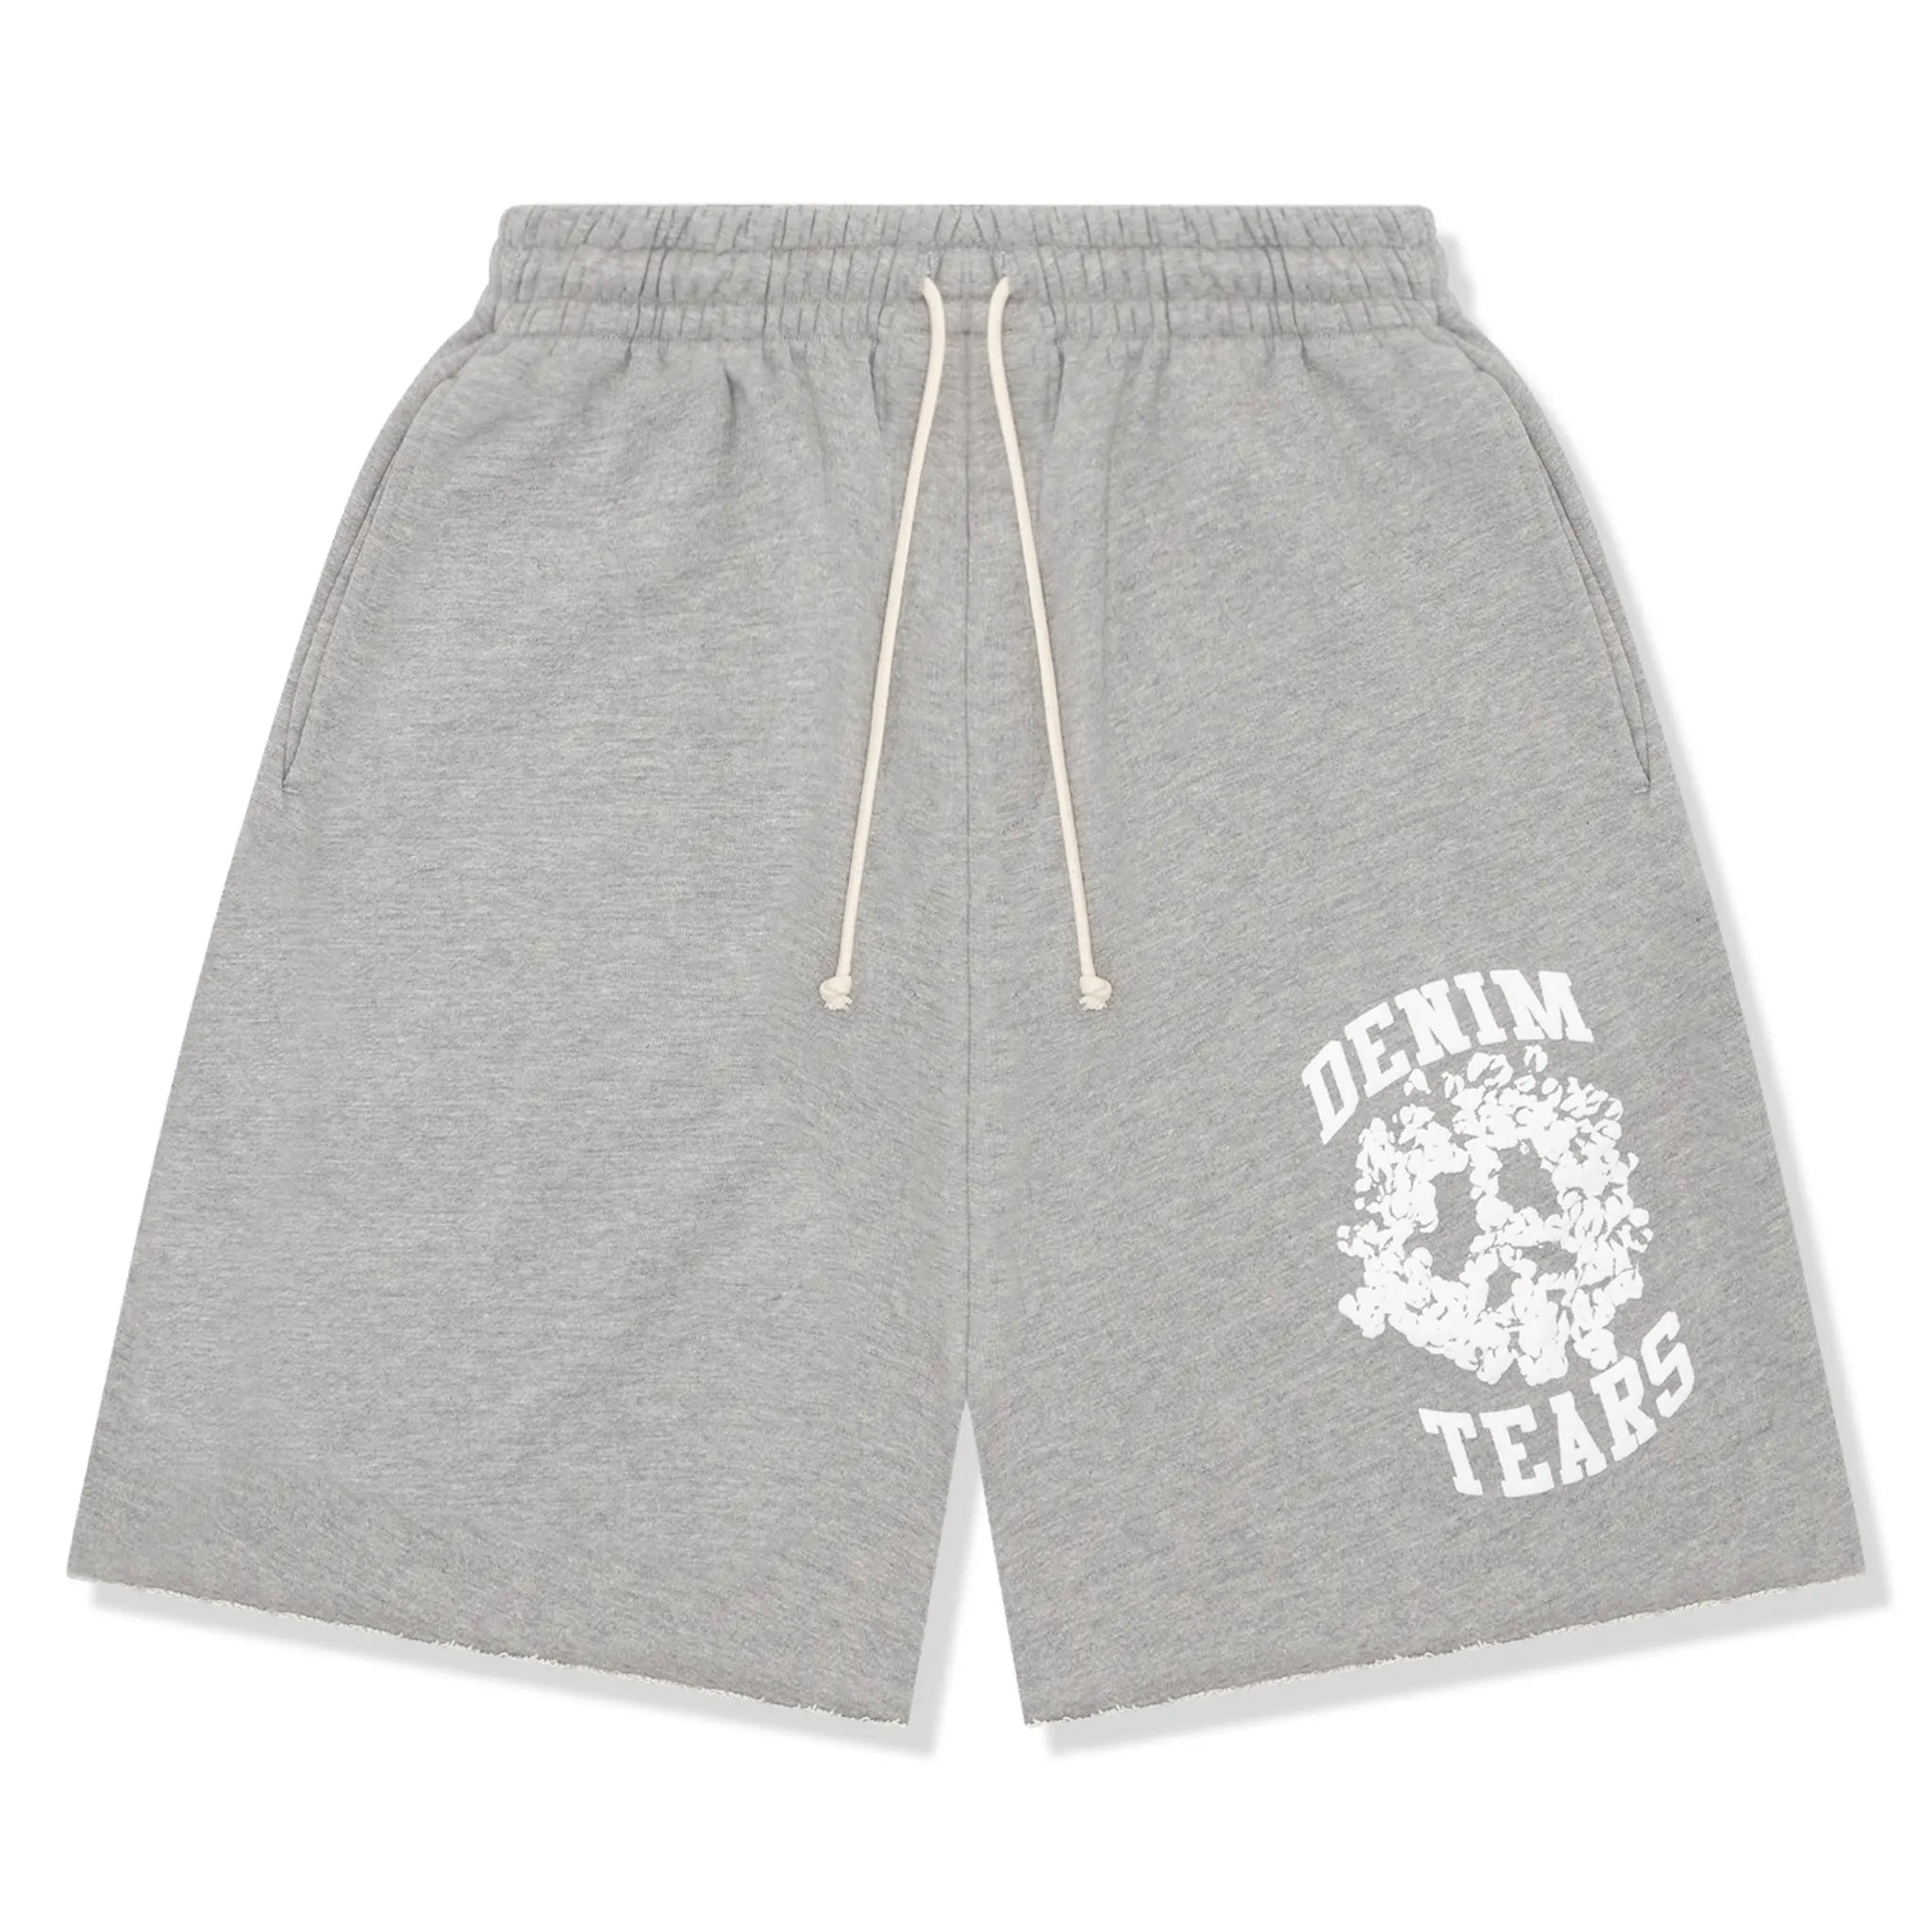 Front view of Denim Tears University Grey Shorts 402-070-27